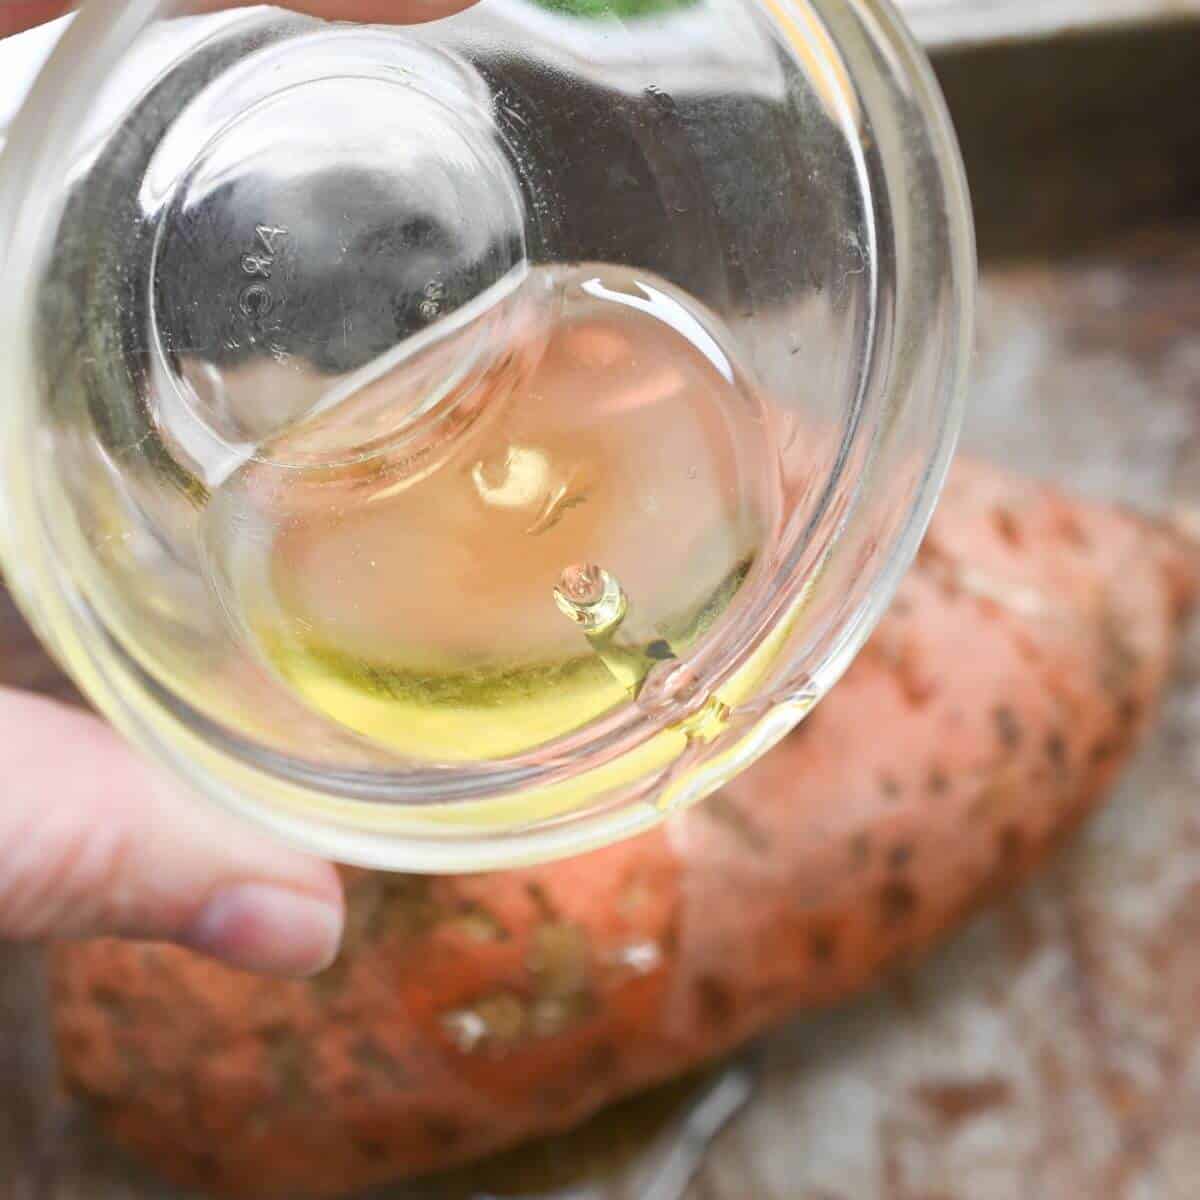 A person pouring oil into a glass next to a sweet potato.